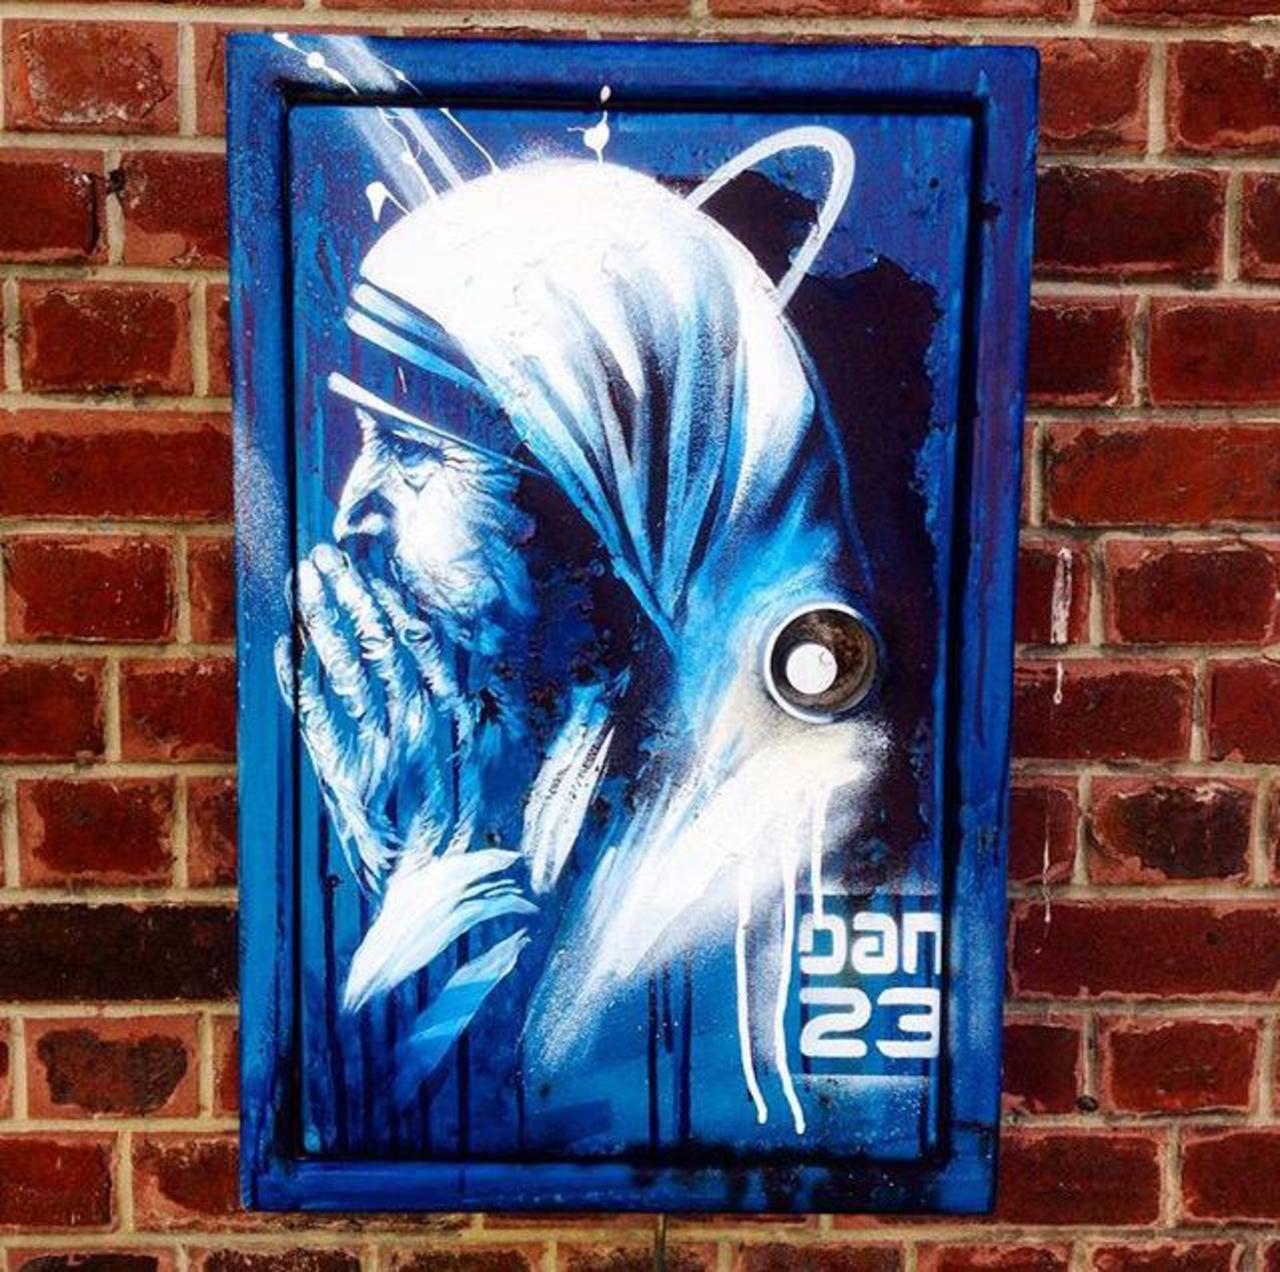 New Street Art 'Détail Spirit' by Dan23 

#art #graffiti #mural #streetart http://t.co/dDVBcn1bJn